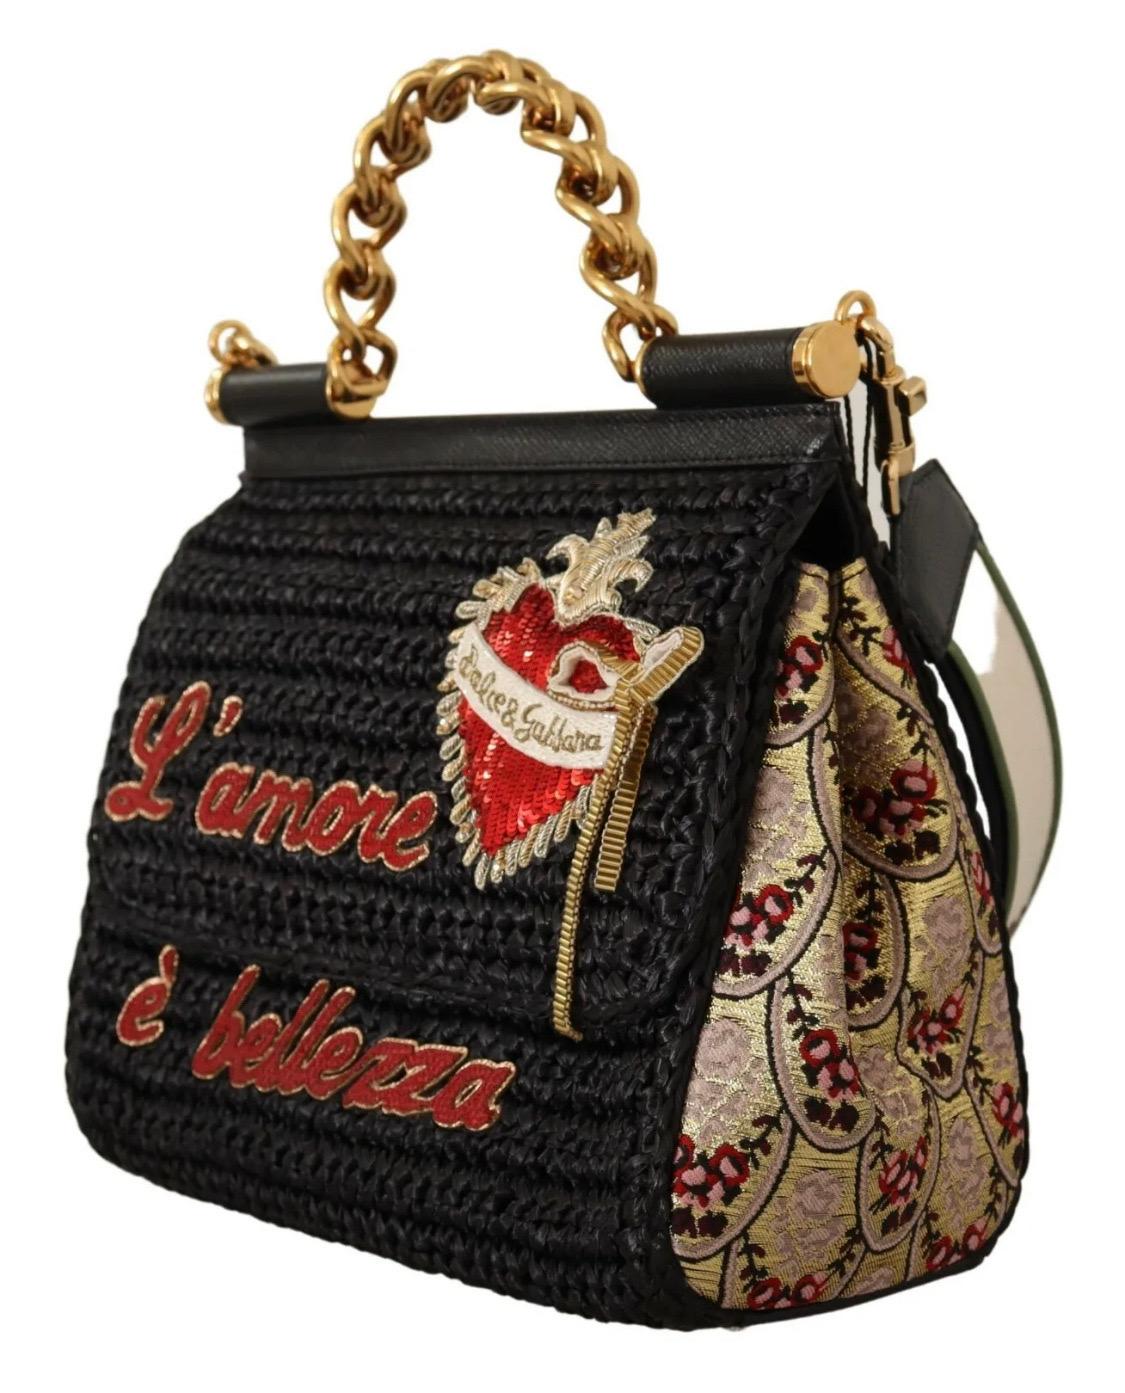 Black Dolce & Gabbana black Sicily l’amore e bellezza  
Top handle Purse bag 